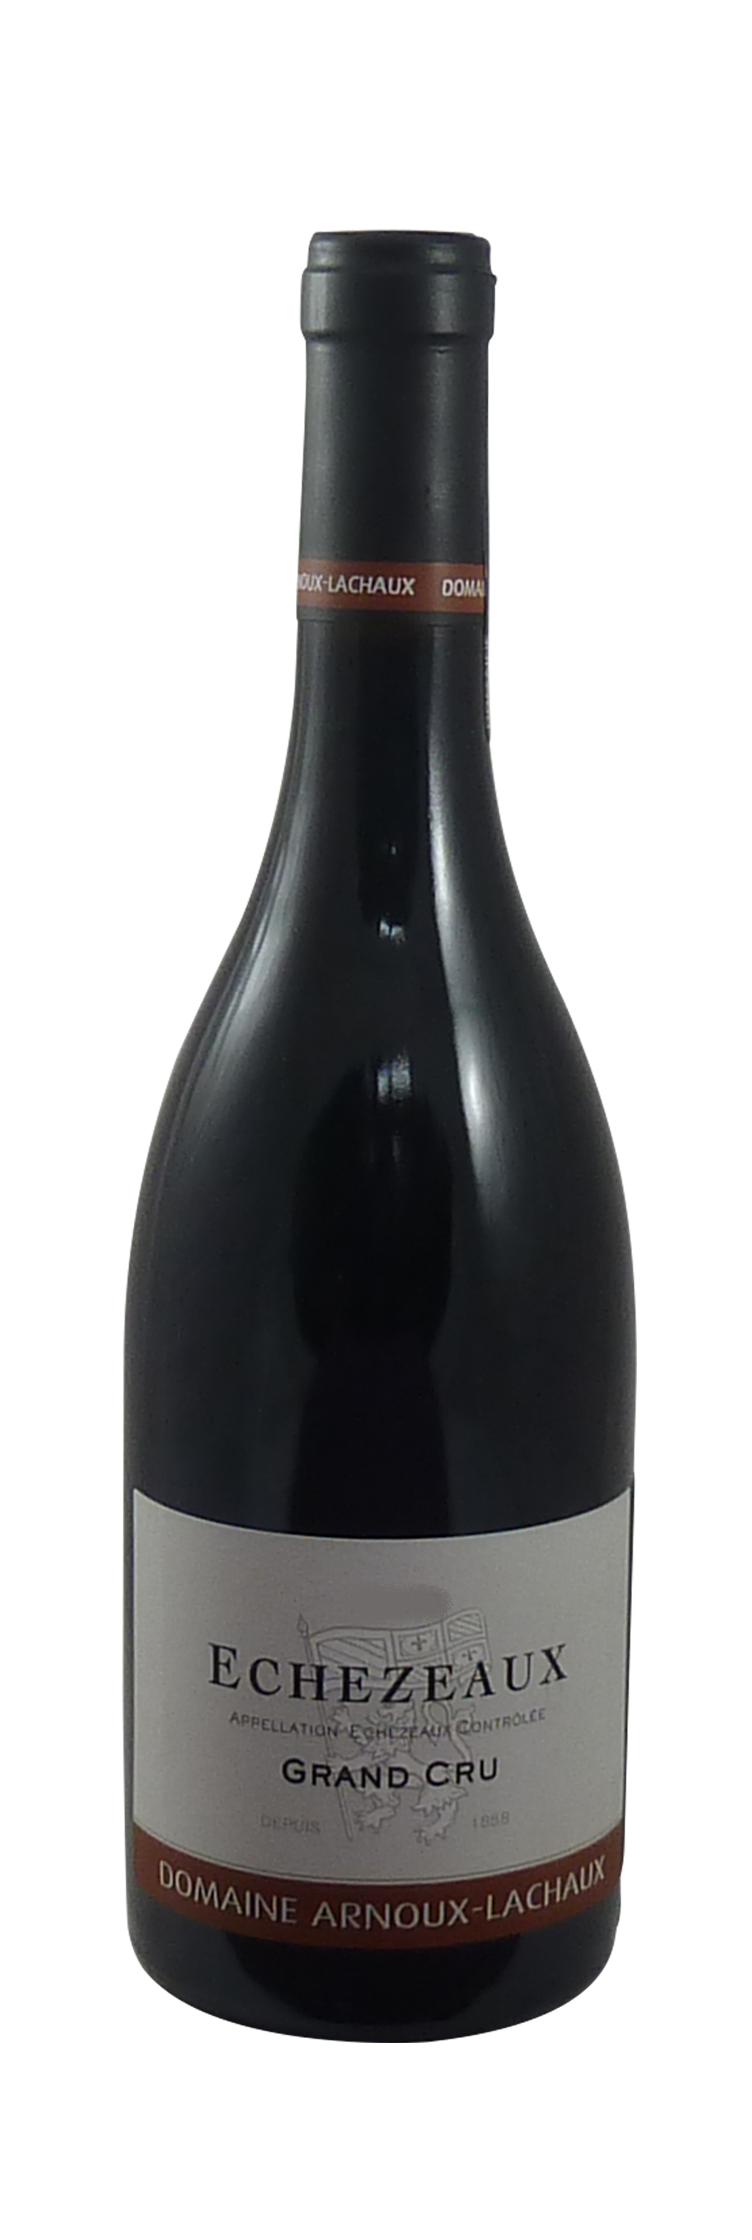 Bottle shot of 2014 Echézeaux Grand Cru